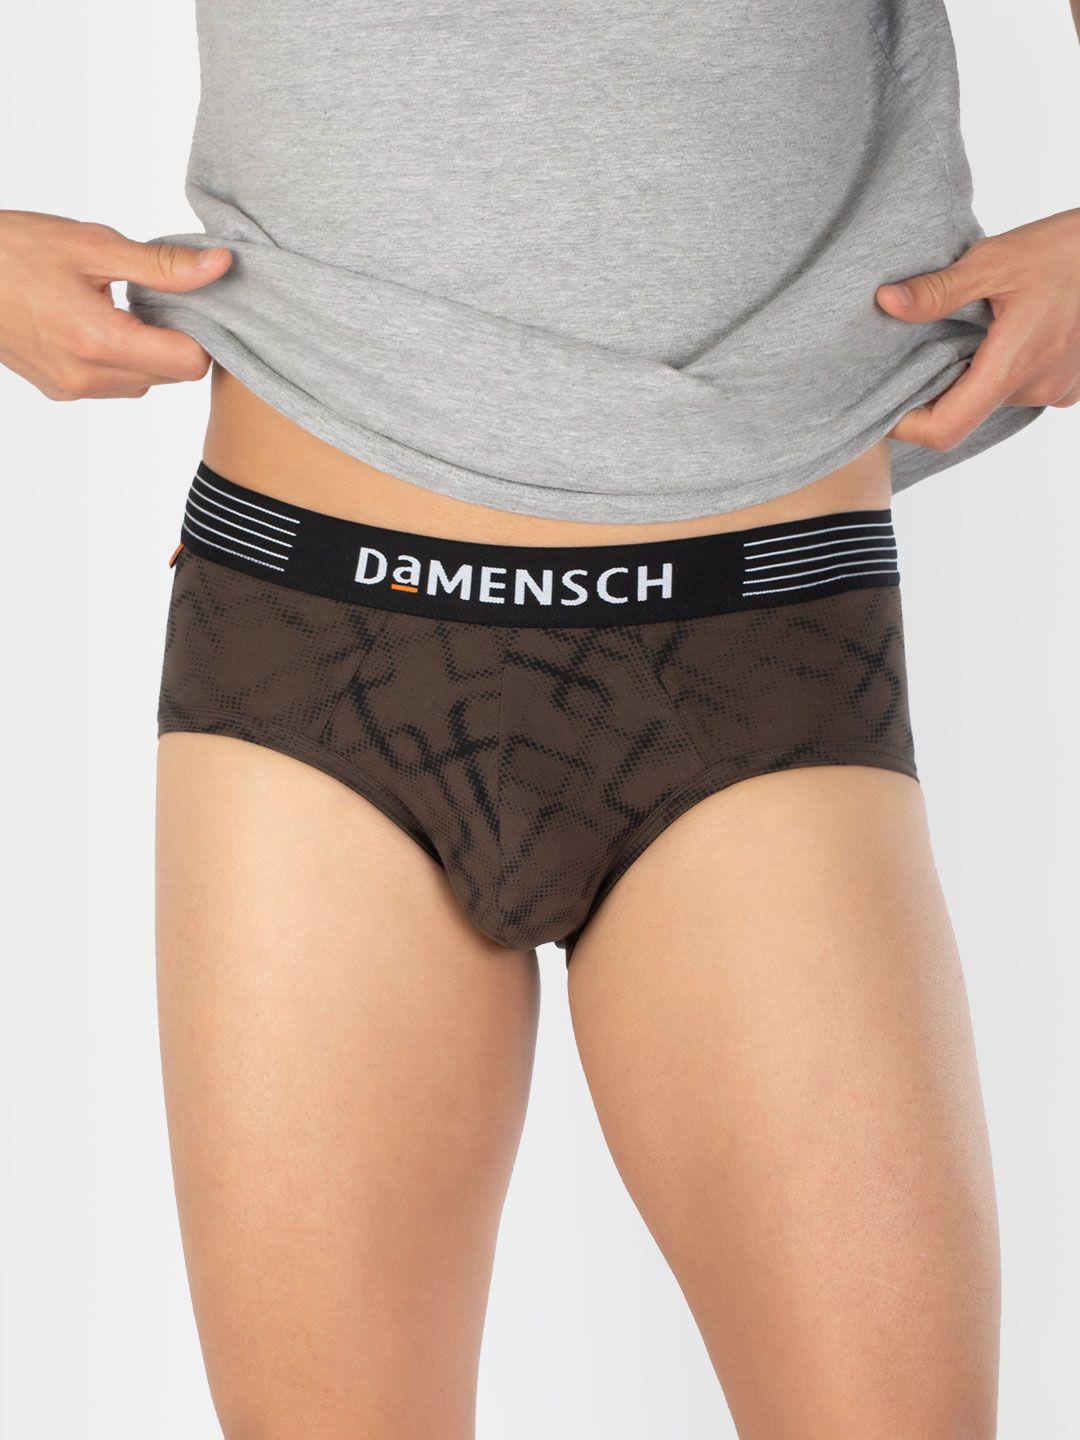 damensch-men-brown-&-black-printed-deodorizing-basic-briefs-dam-ctp-b-brb